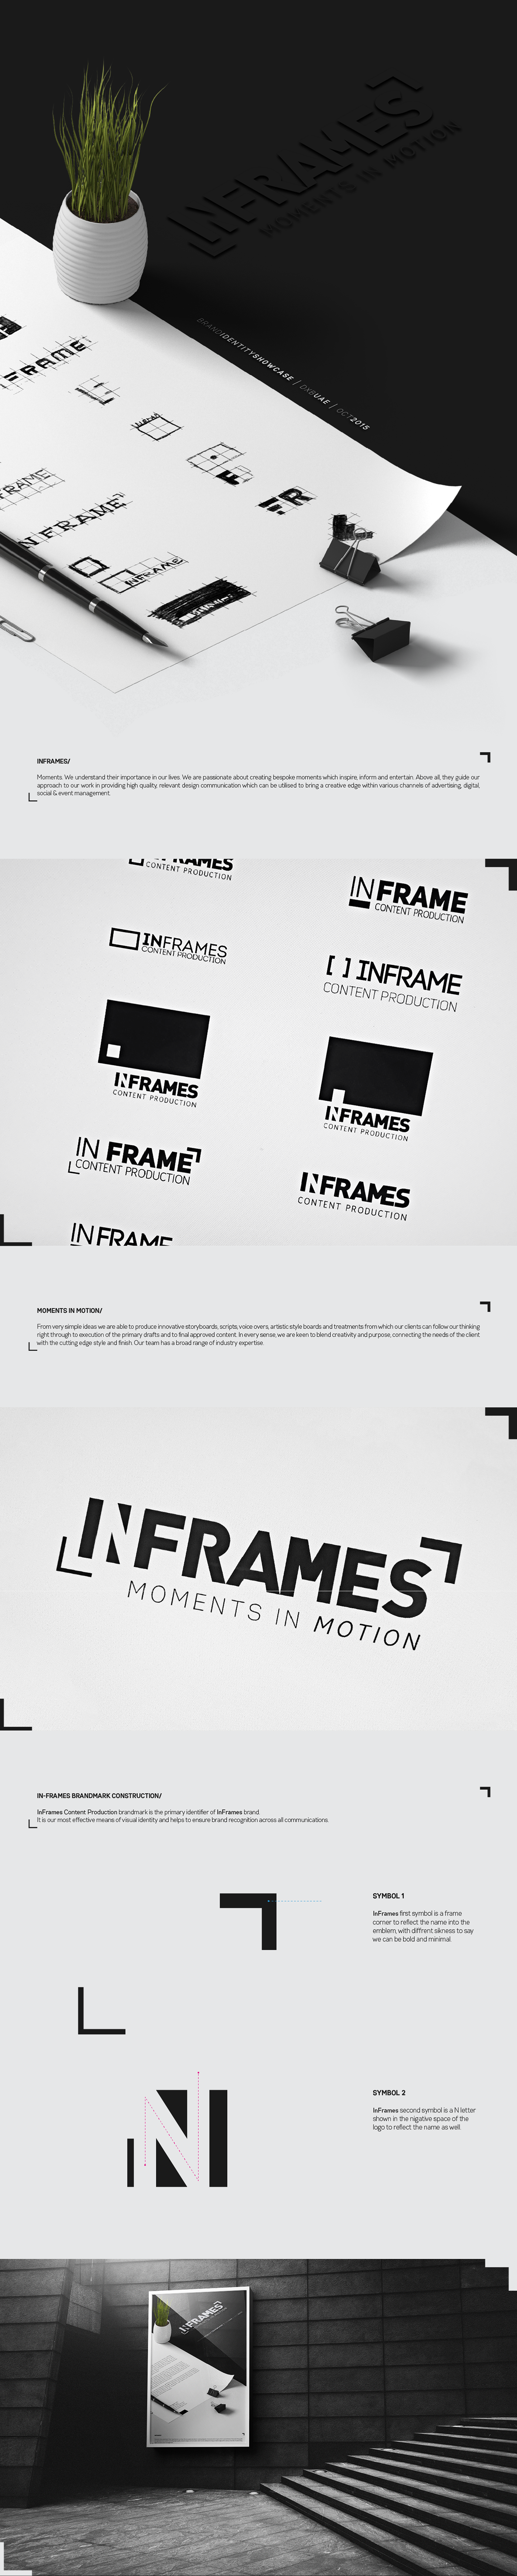 brand identity Brand System guideline visual language Agency Brand Logo Design black & white Media content INF animation 